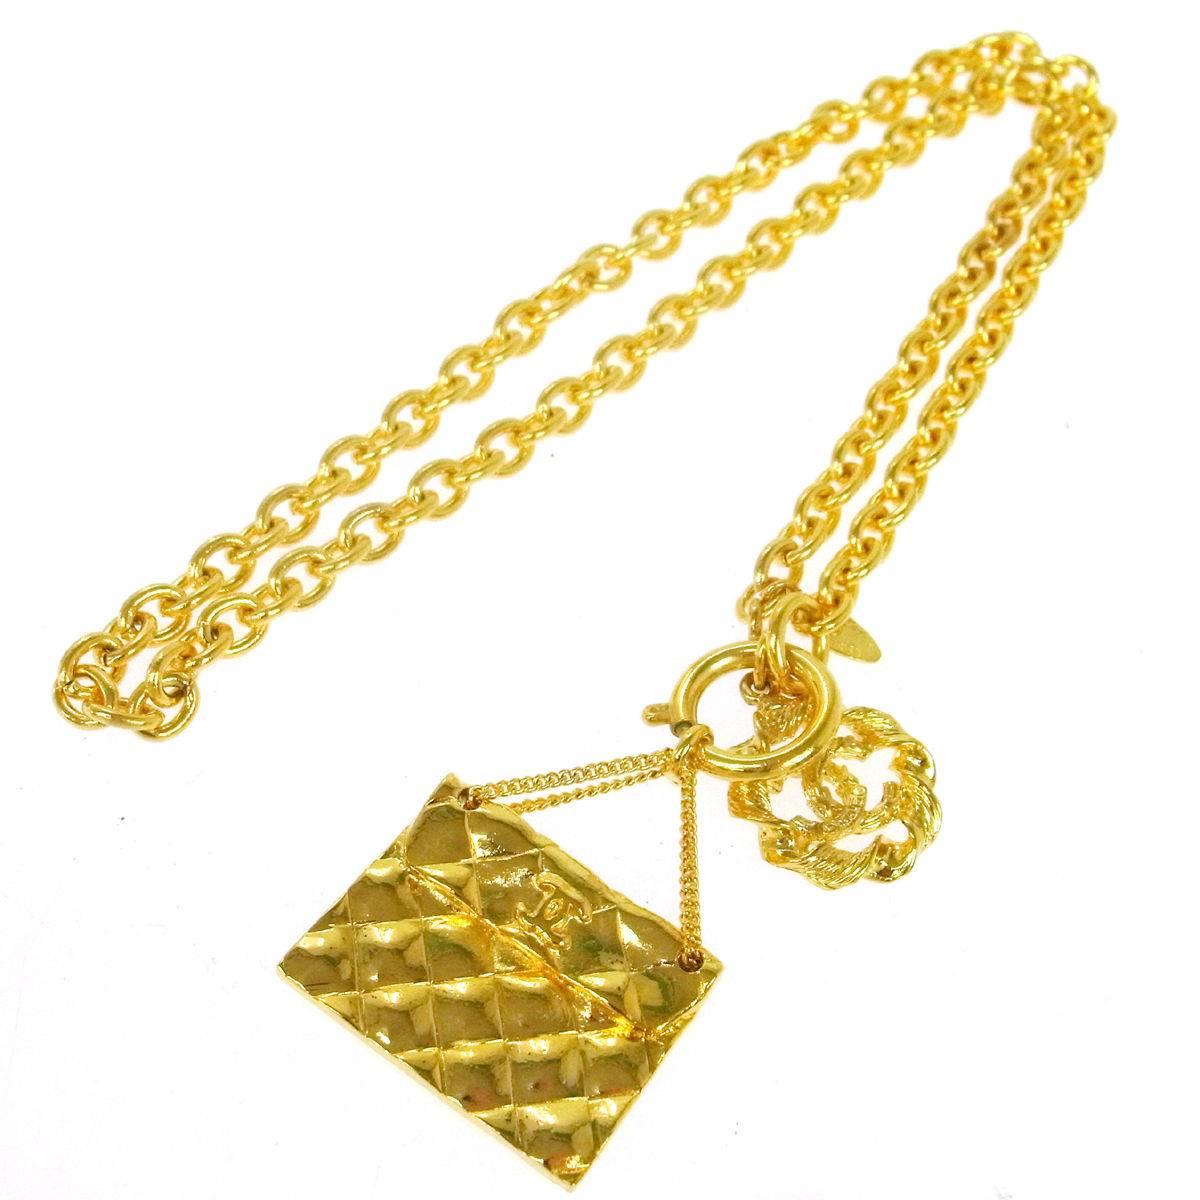 Chanel Vintage Gold Flap Bag Charm Chain Necklace